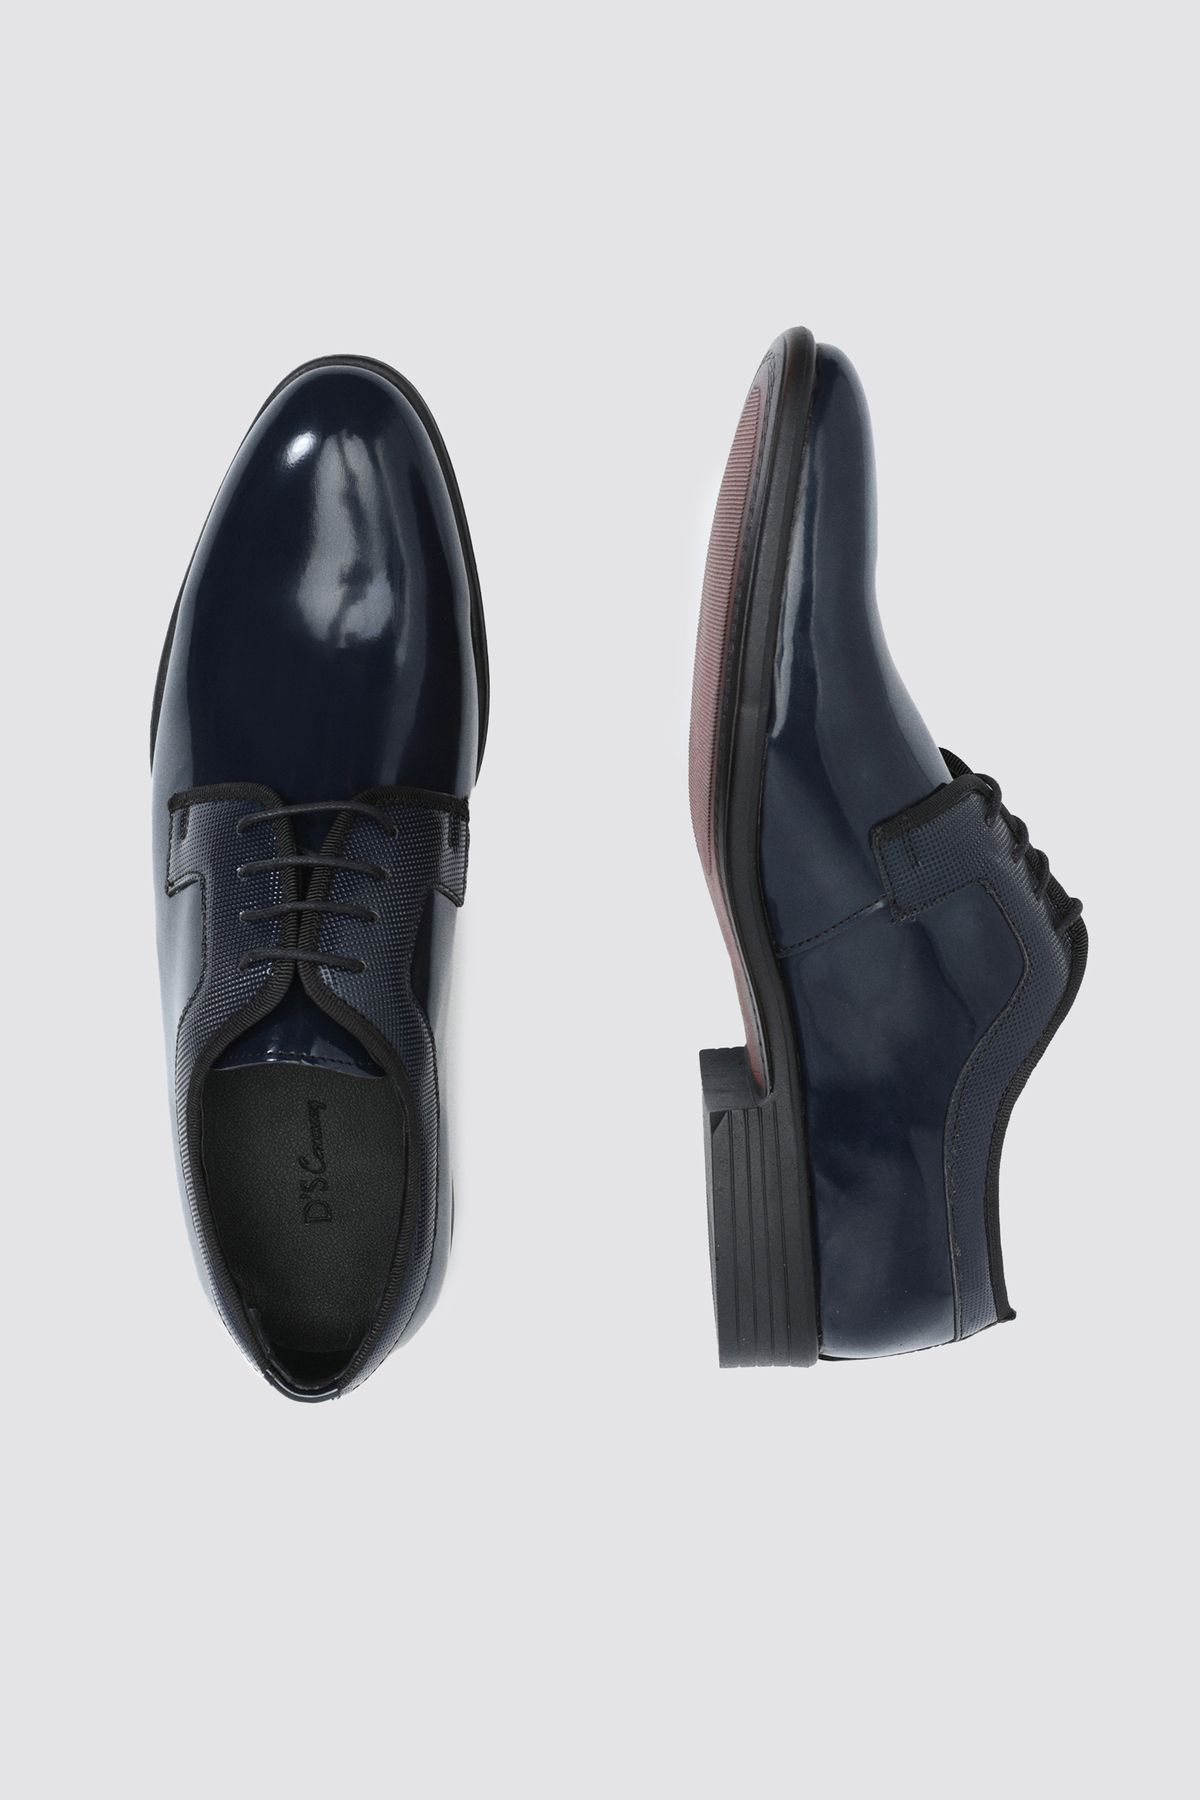 D'S Damat DS Groom Navy Blue Patent Leather Tuxedo Shoes